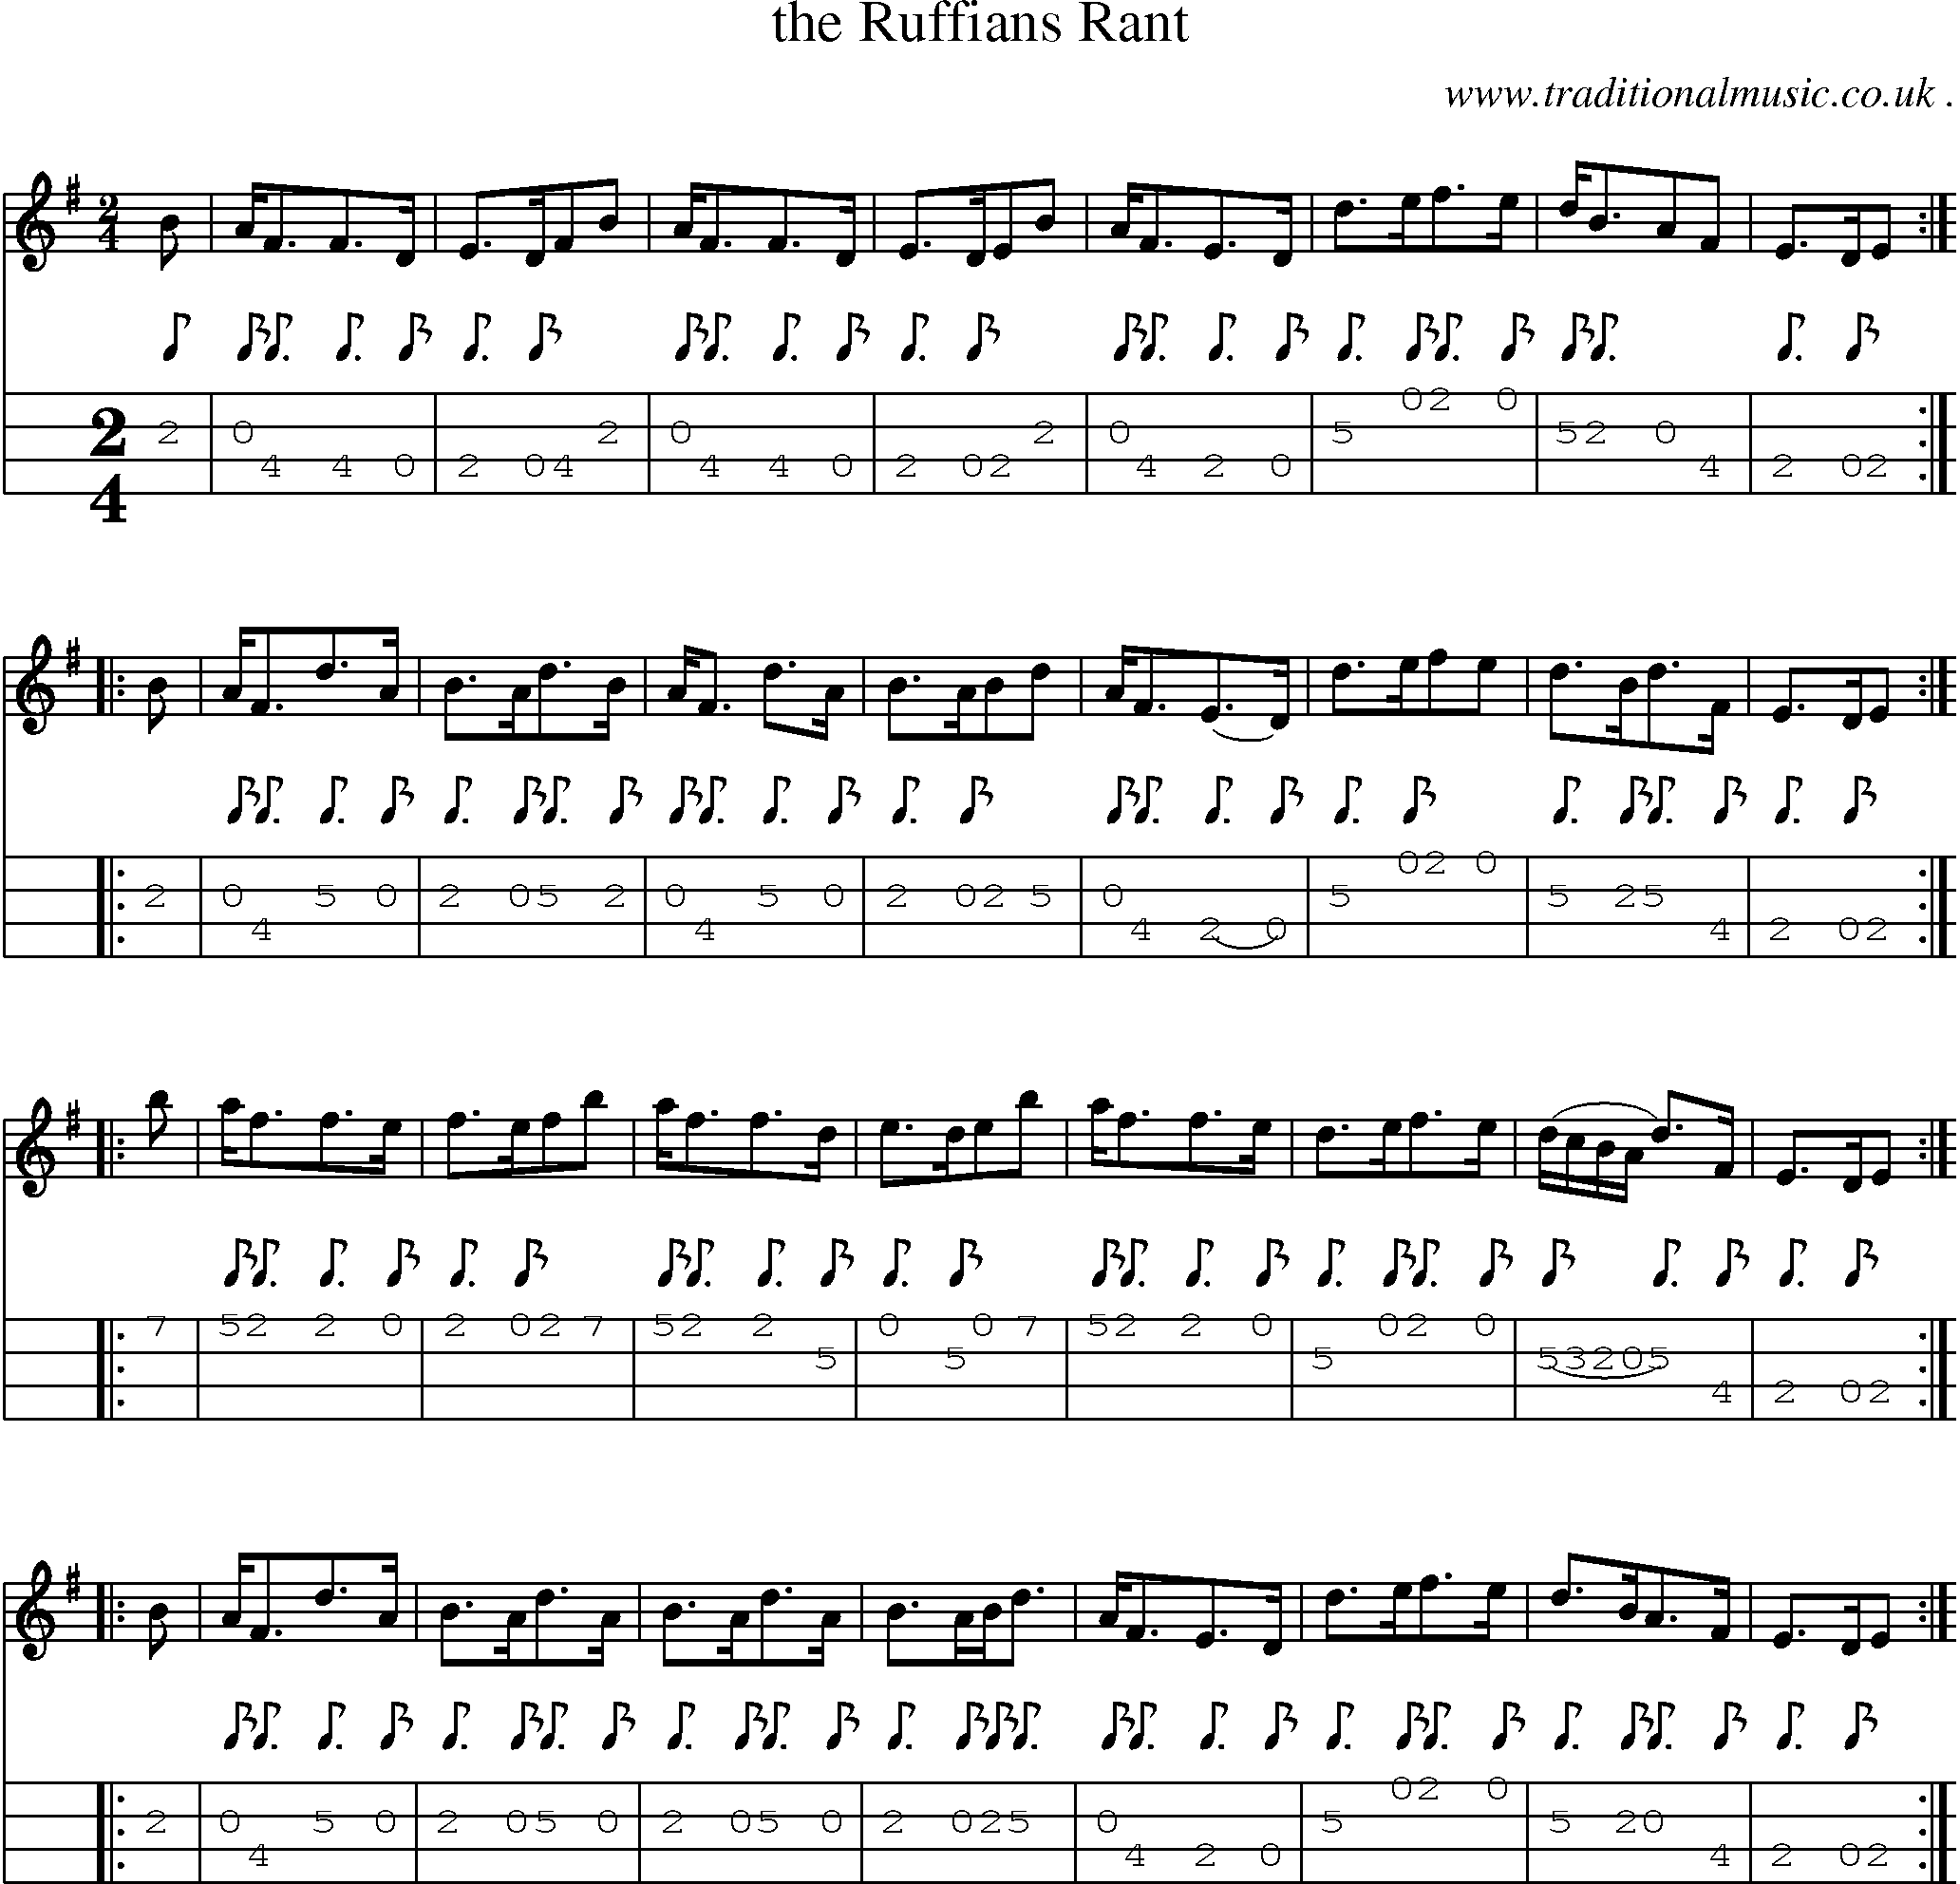 Sheet-Music and Mandolin Tabs for The Ruffians Rant